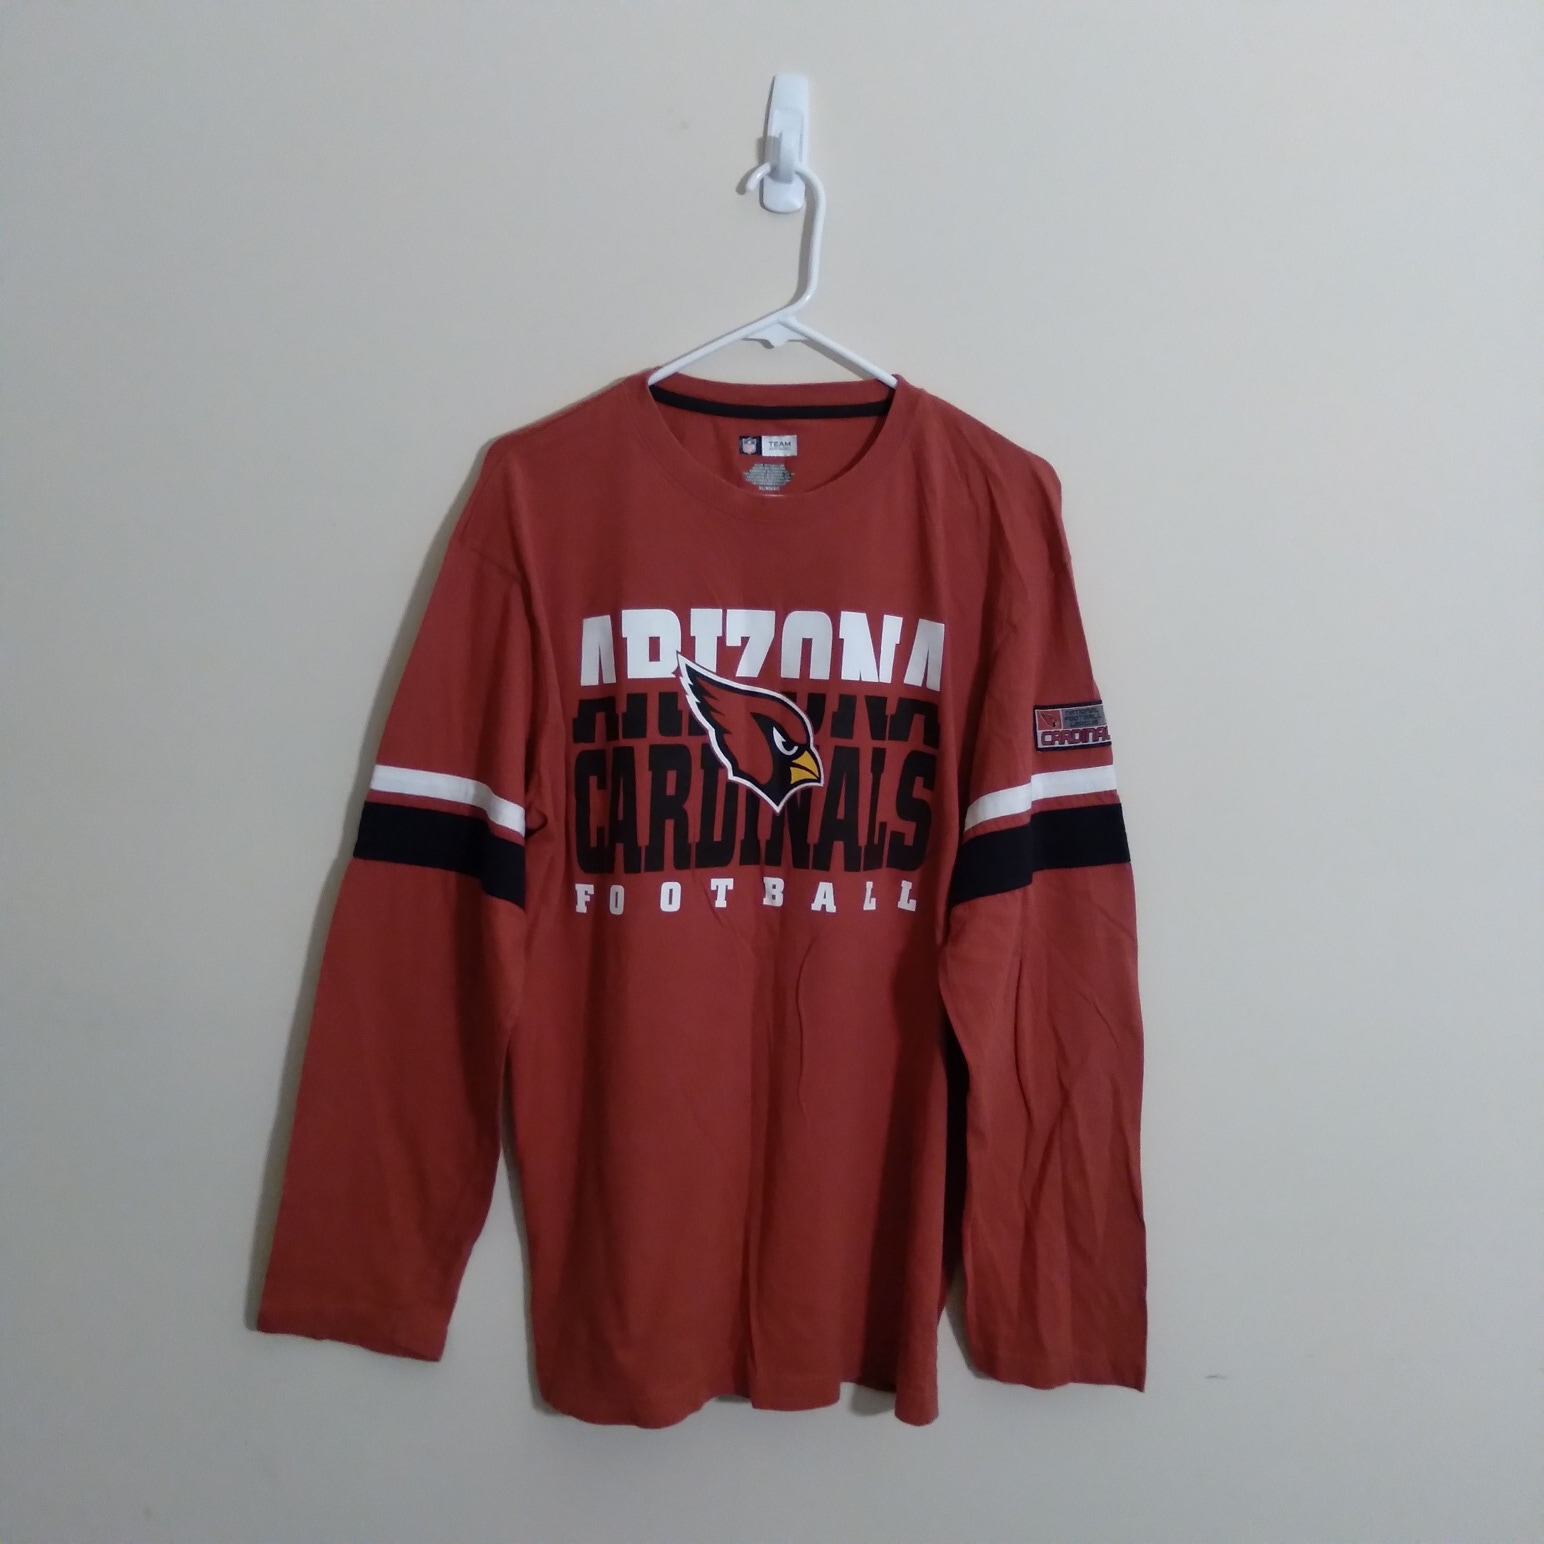 Nfl Arizona Cardinals Spell Out Graphic Print Long Sleeve T-Shirt Sz XLarge